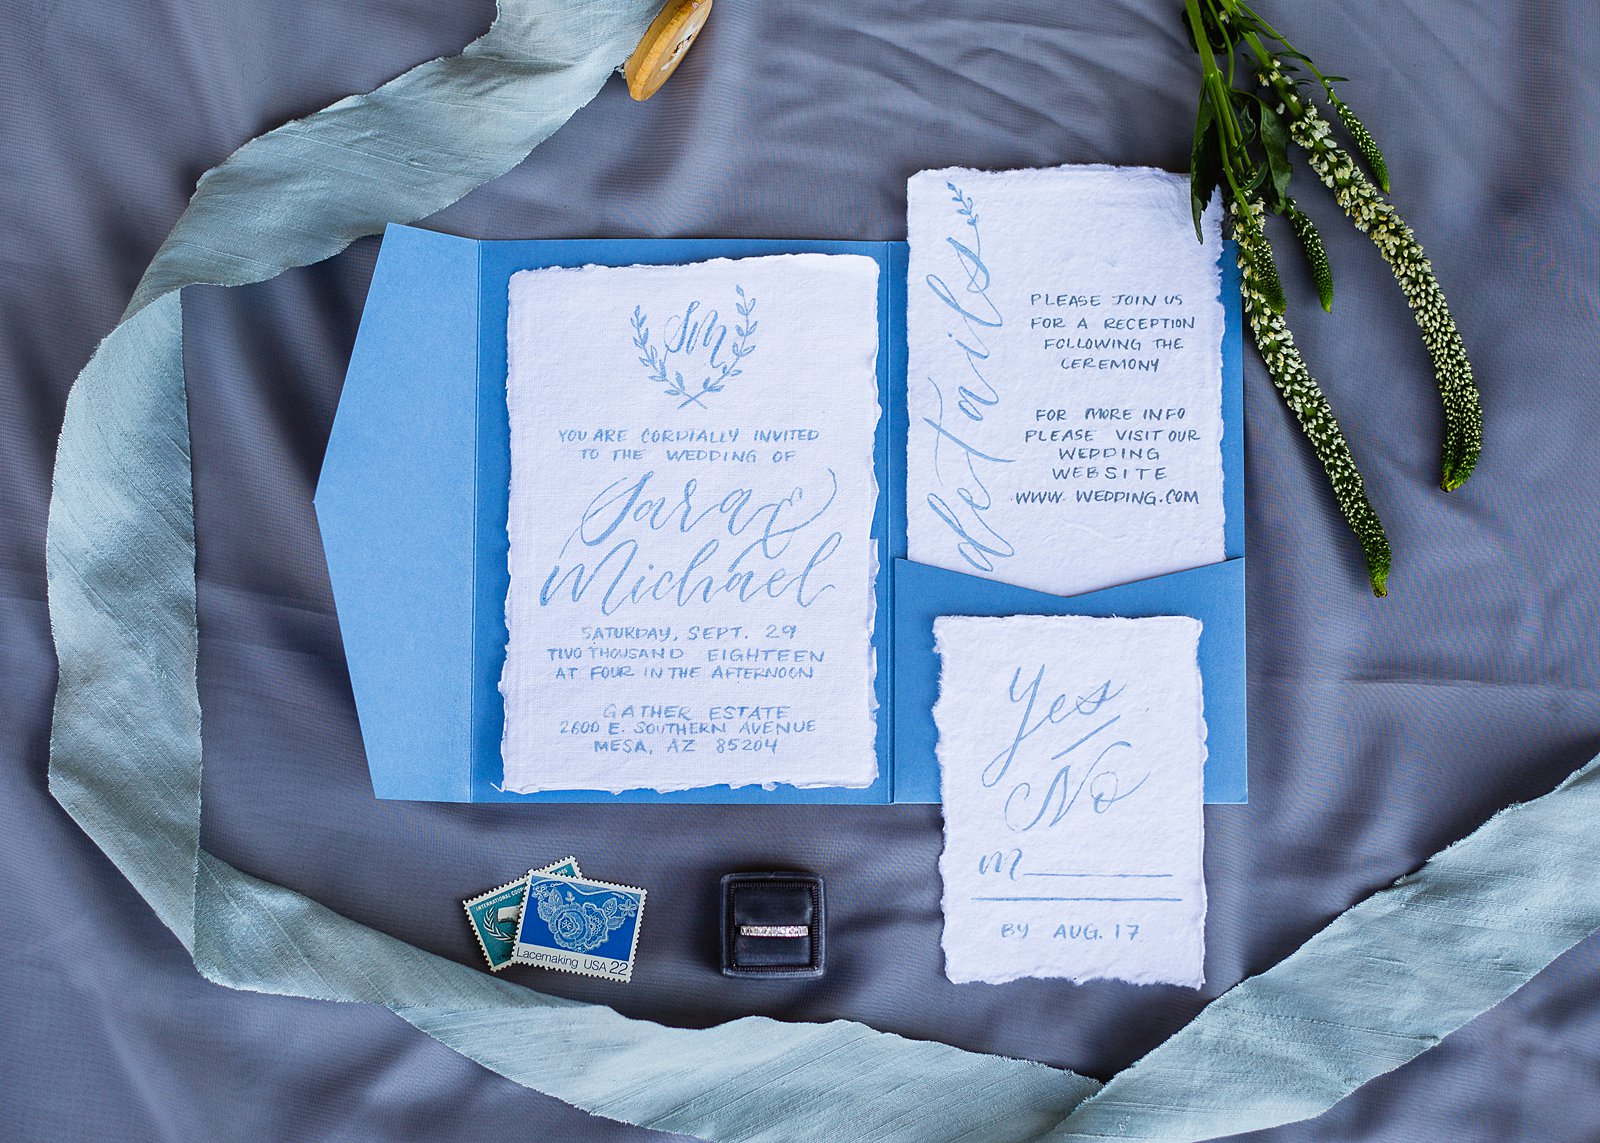 Wedding invitations and stationary lay flat image by PMA Photography.